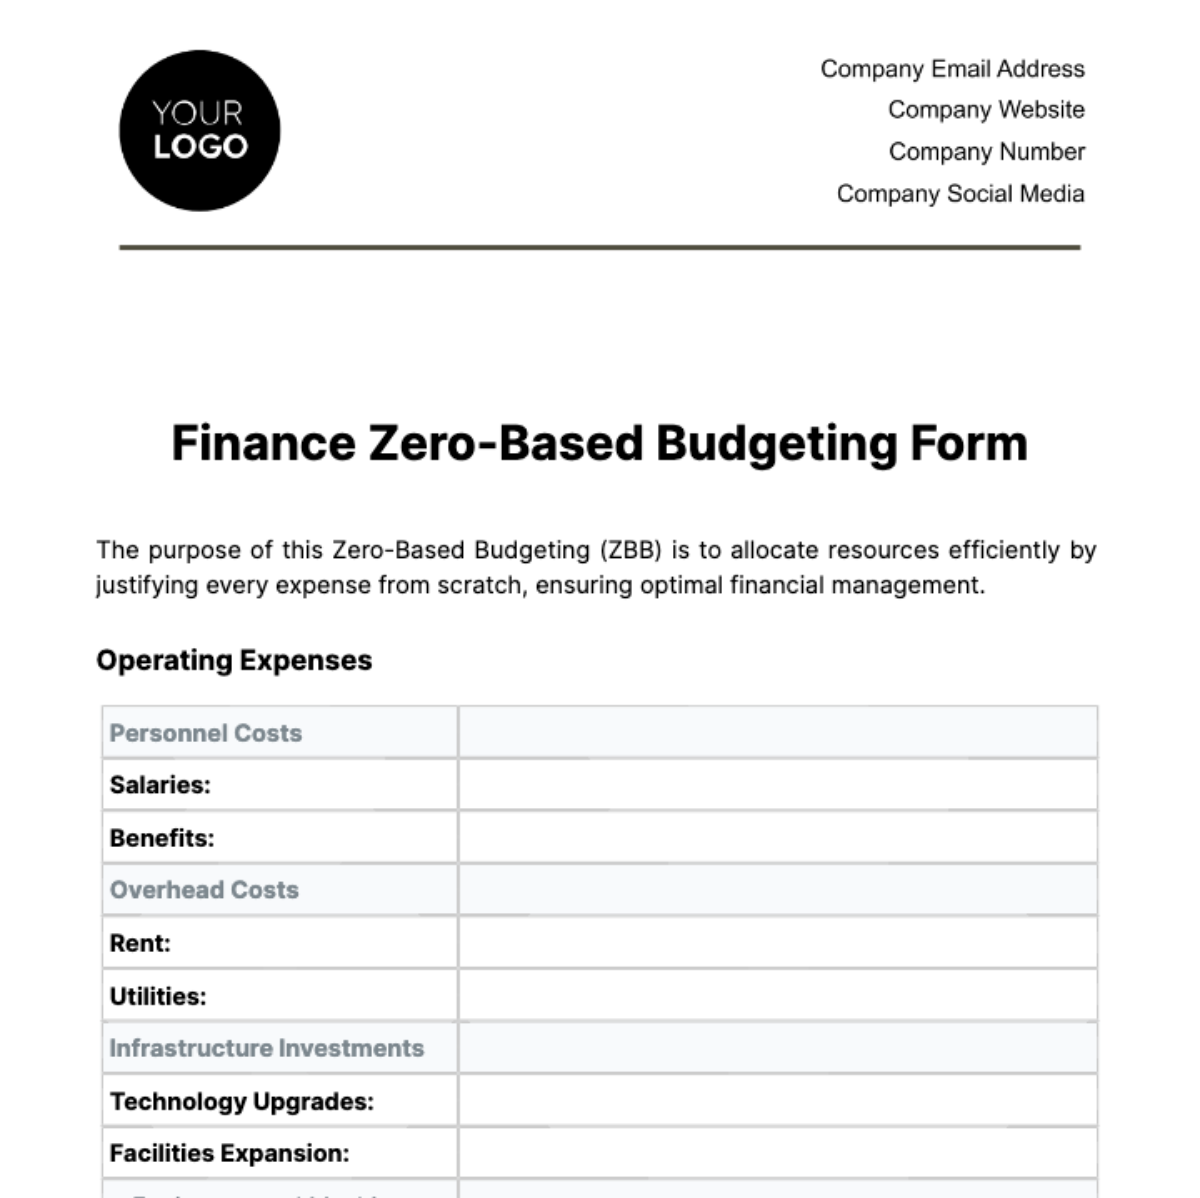 Free Finance Zero-Based Budgeting Form Template